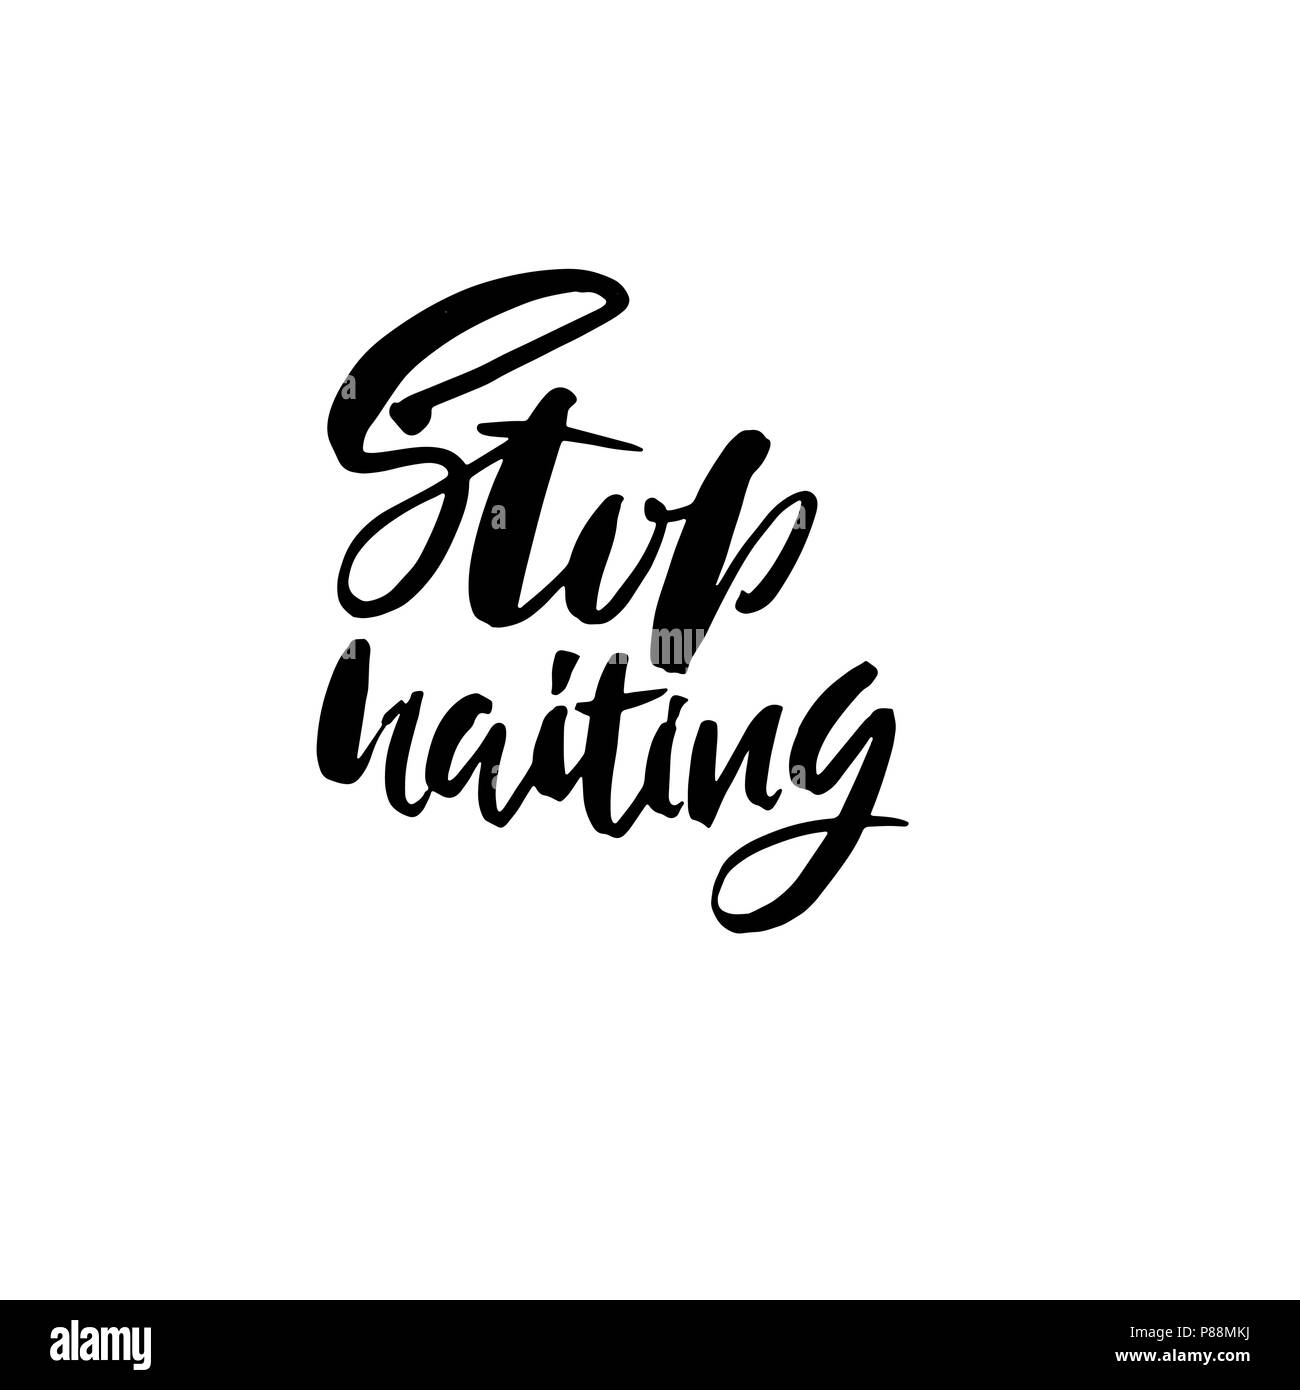 Stop Hating. Hand drawn dry brush motivational lettering. Ink illustration. Modern calligraphy phrase. Vector illustration. Stock Vector